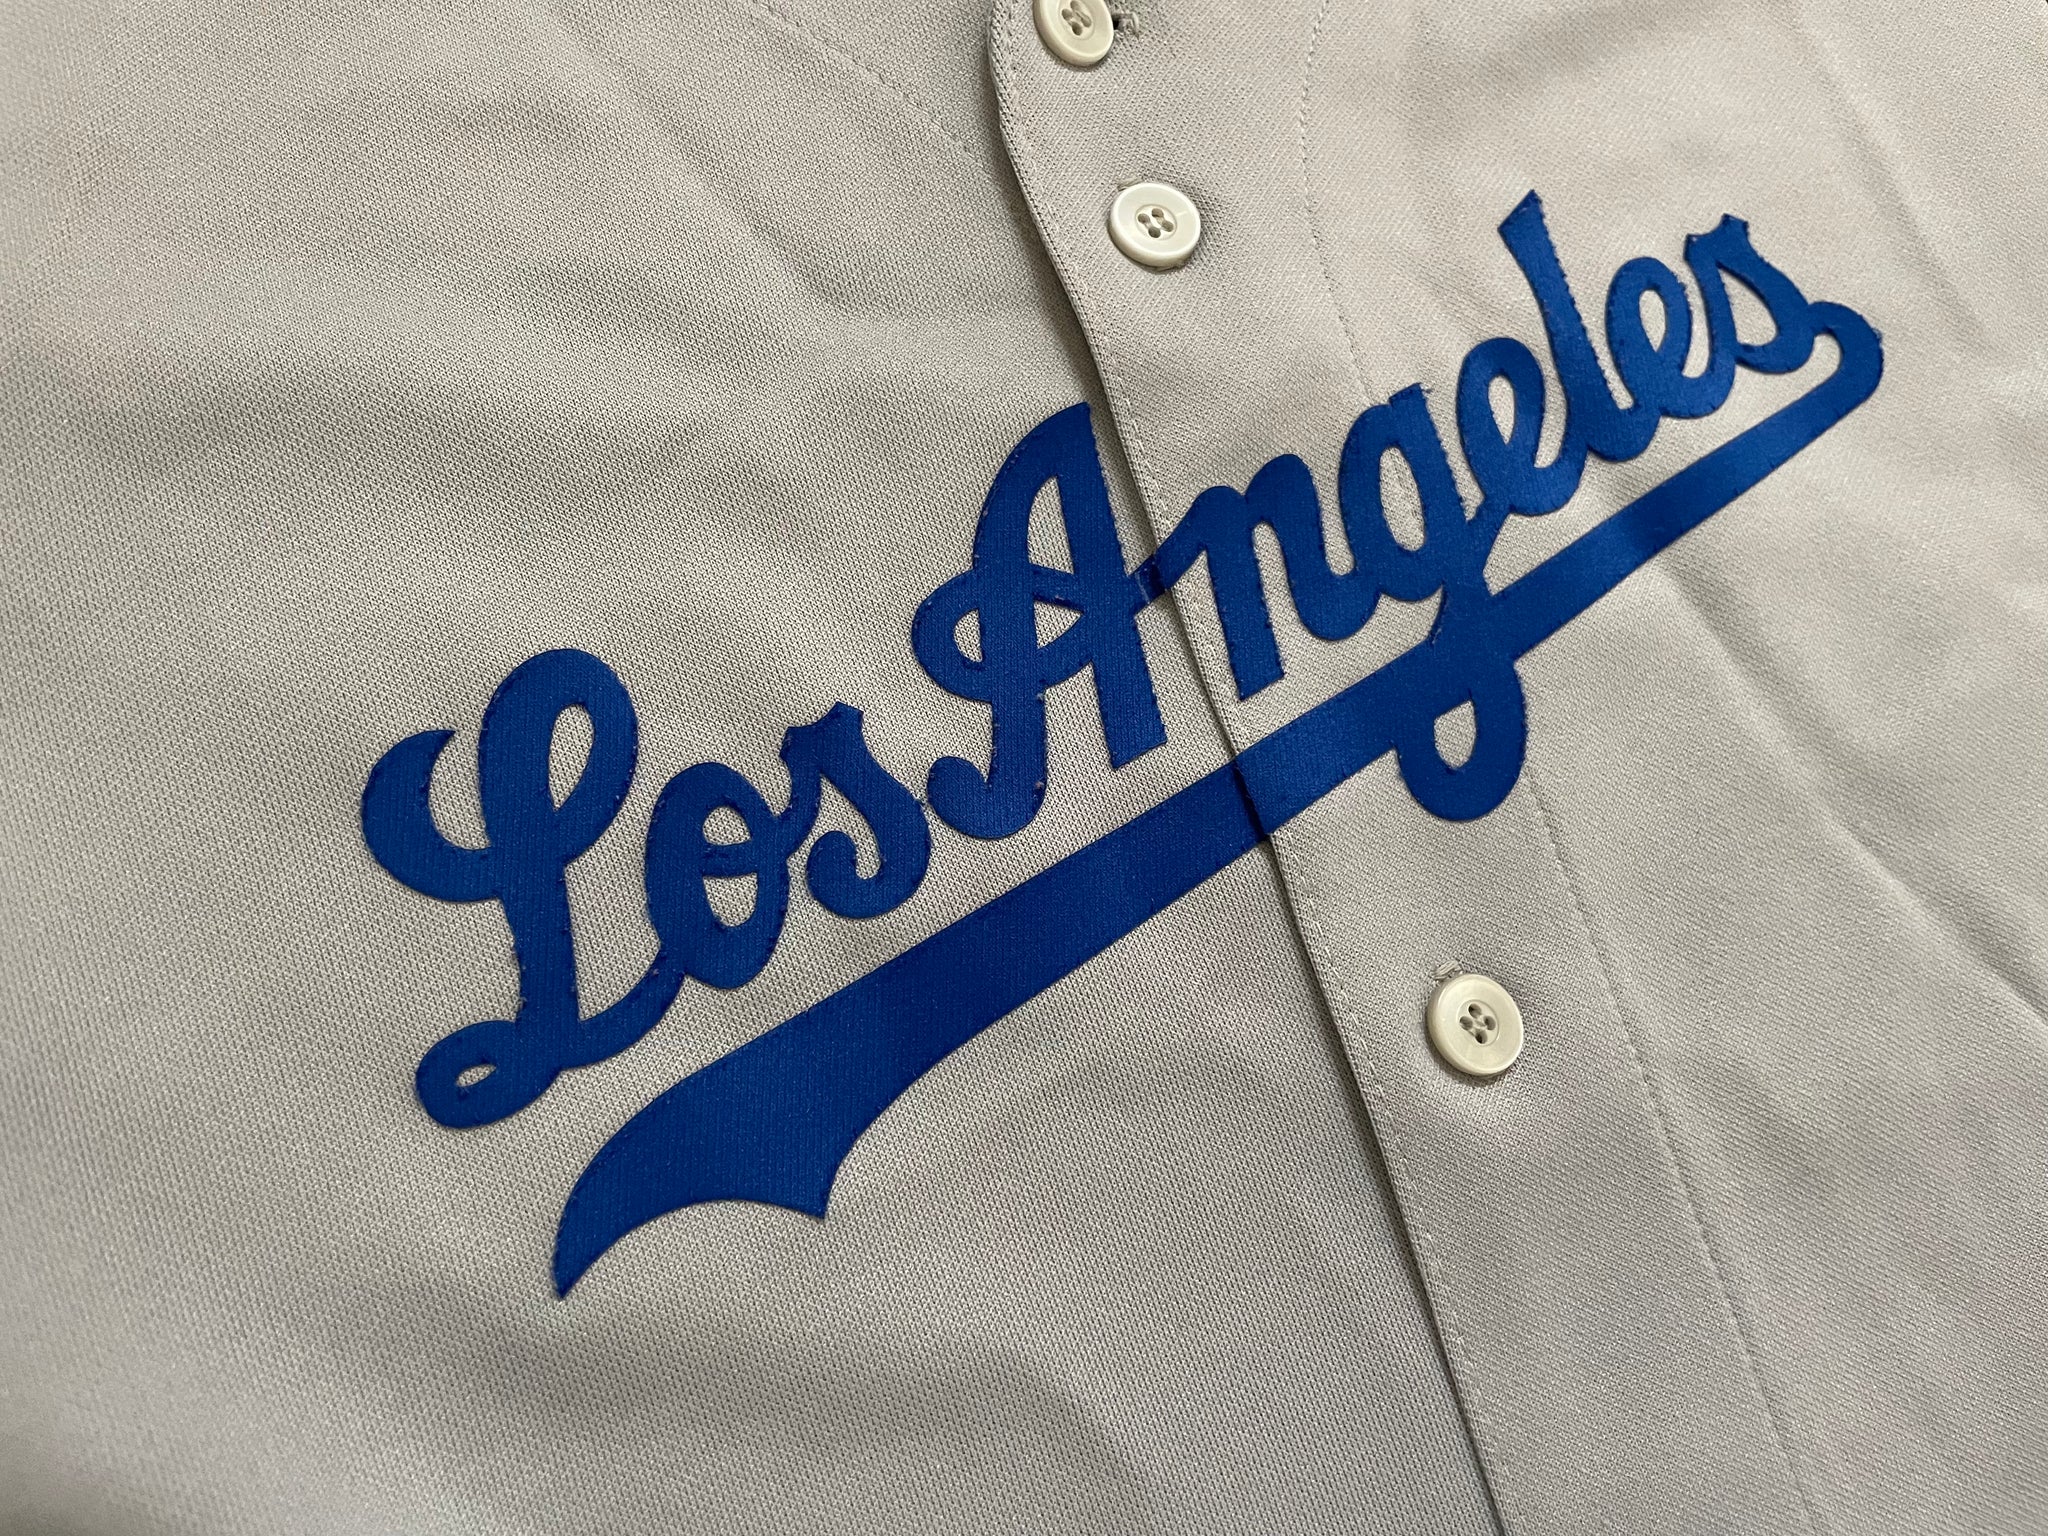 Los Angeles Dodgers Majestic Baseball Jersey, Size Youth Medium